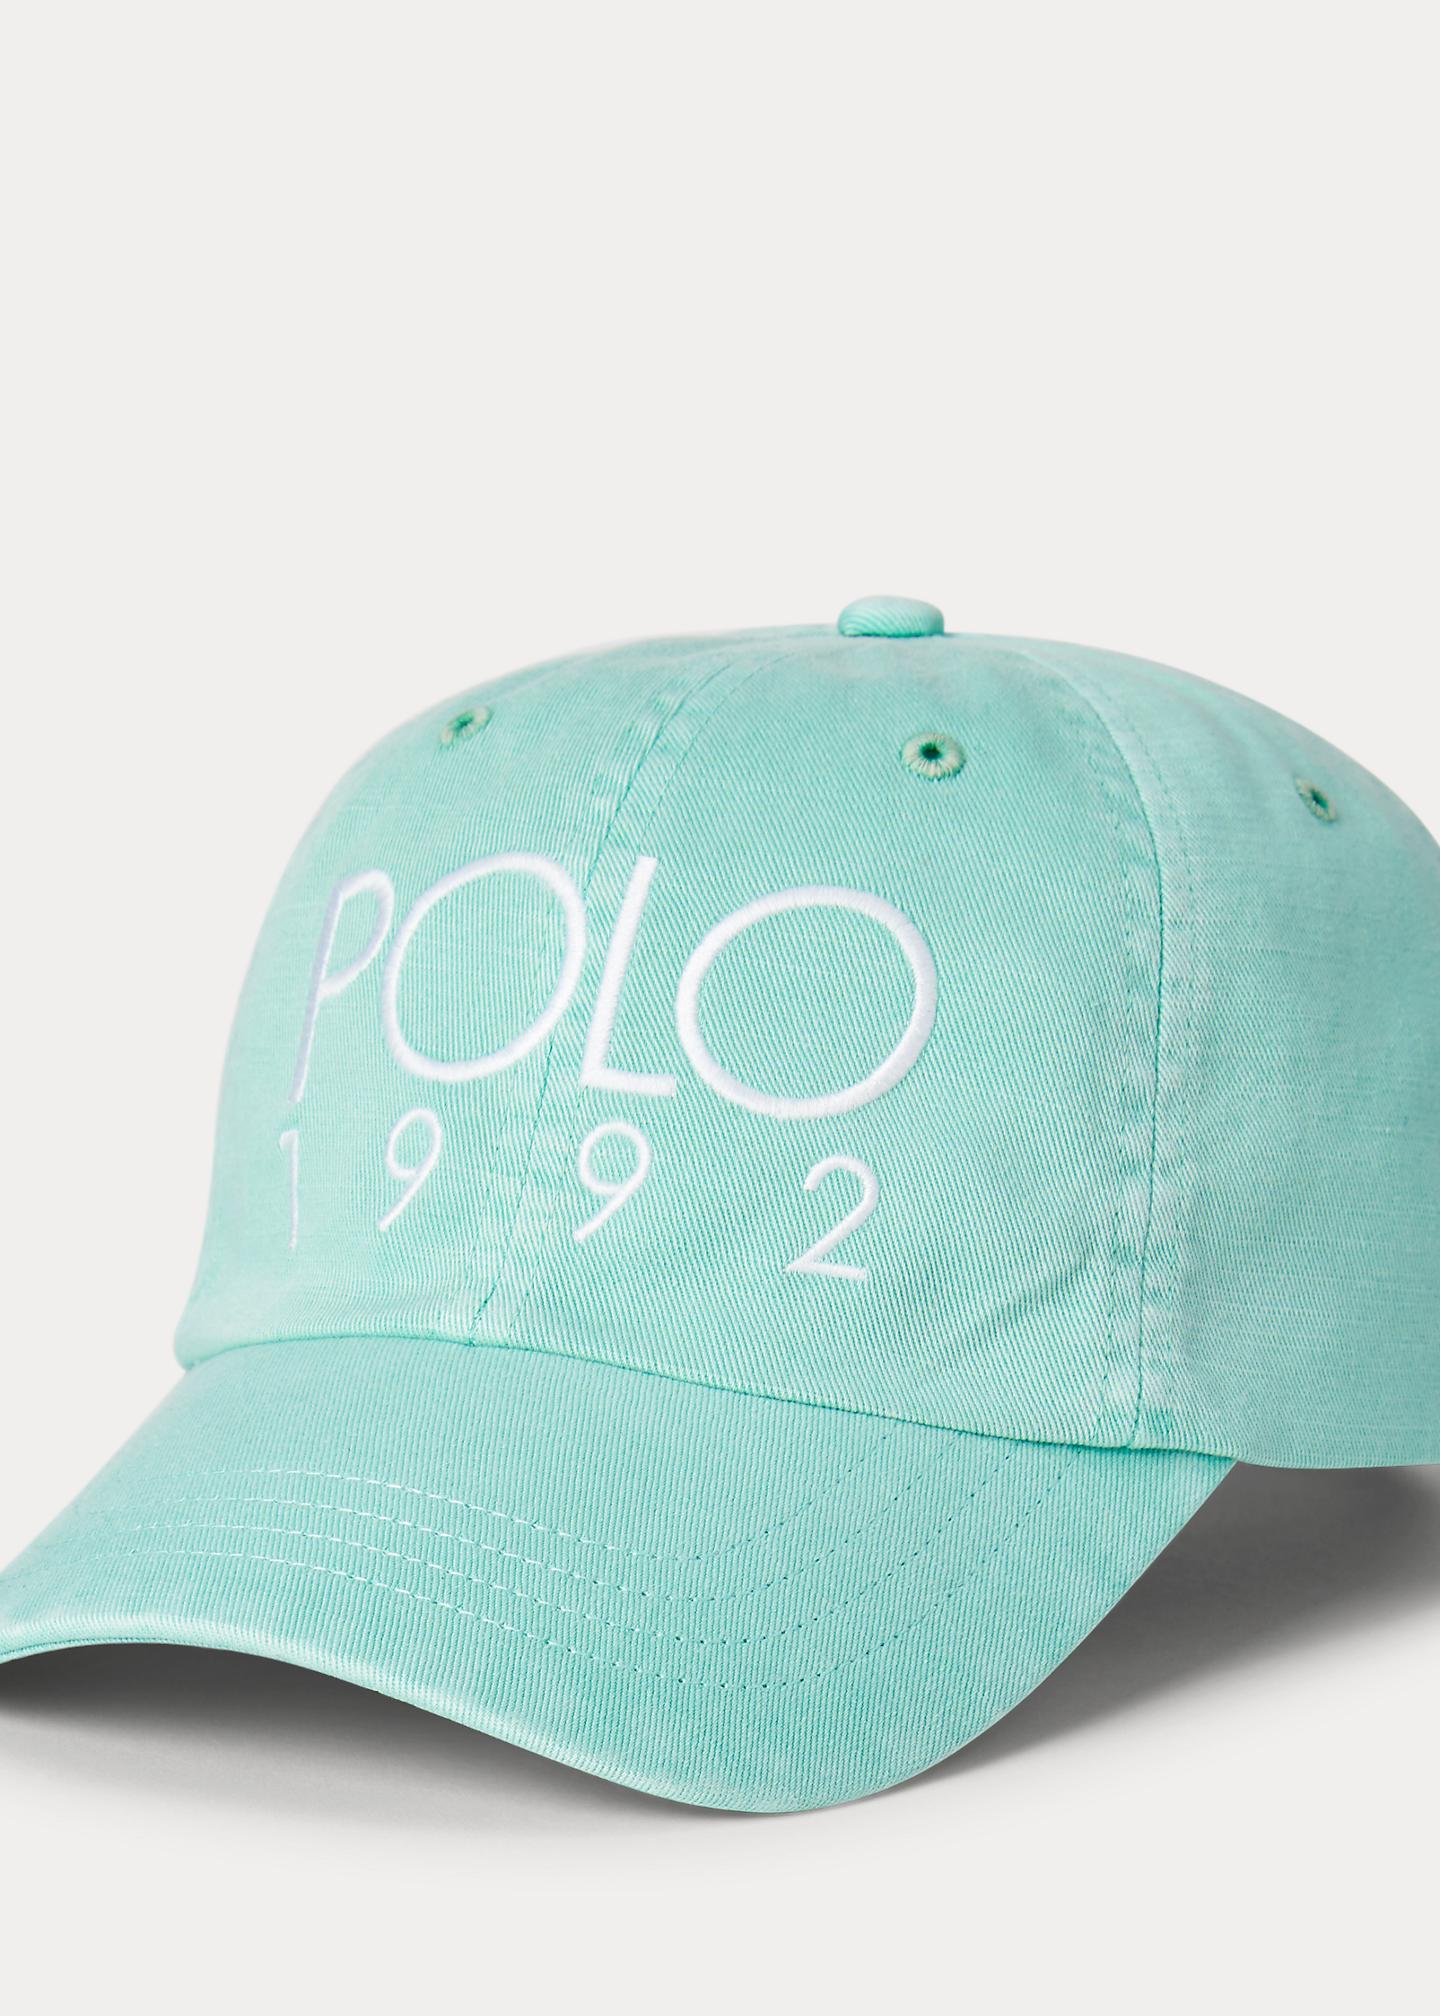 1992 polo hat,cheap - OFF 58% -maharetyemek.com